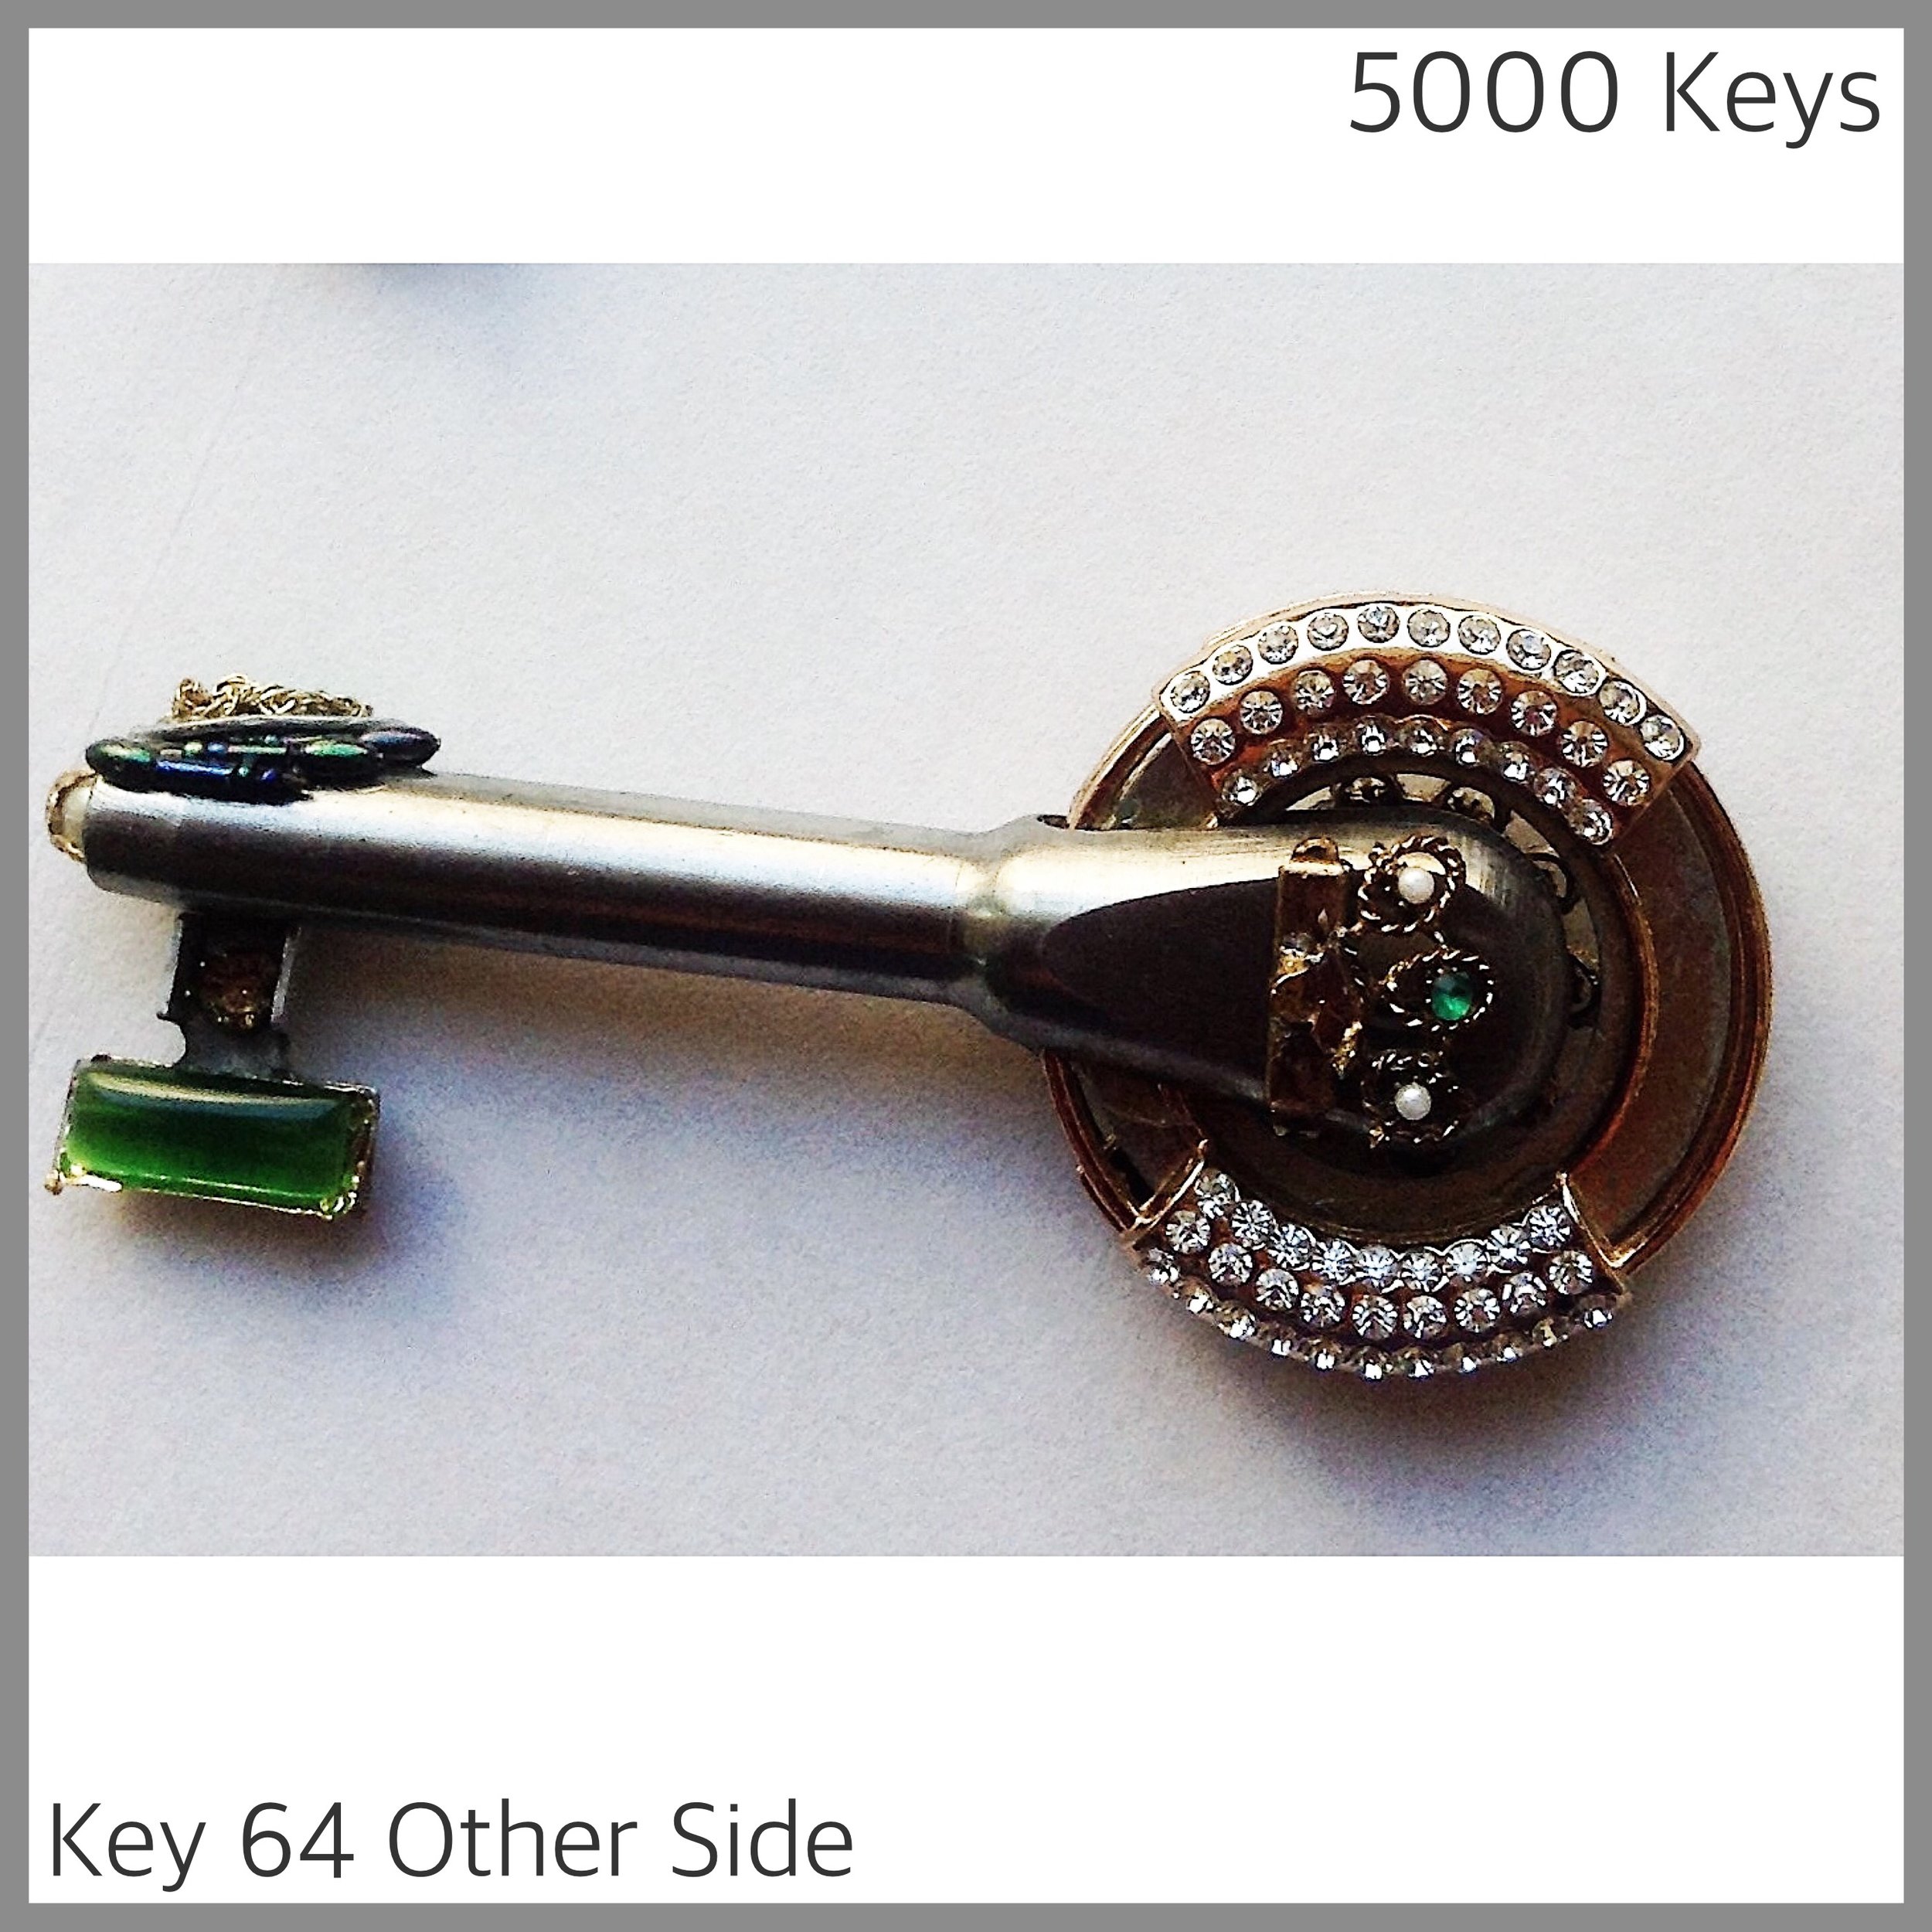 Key 64 other side - 1.JPG